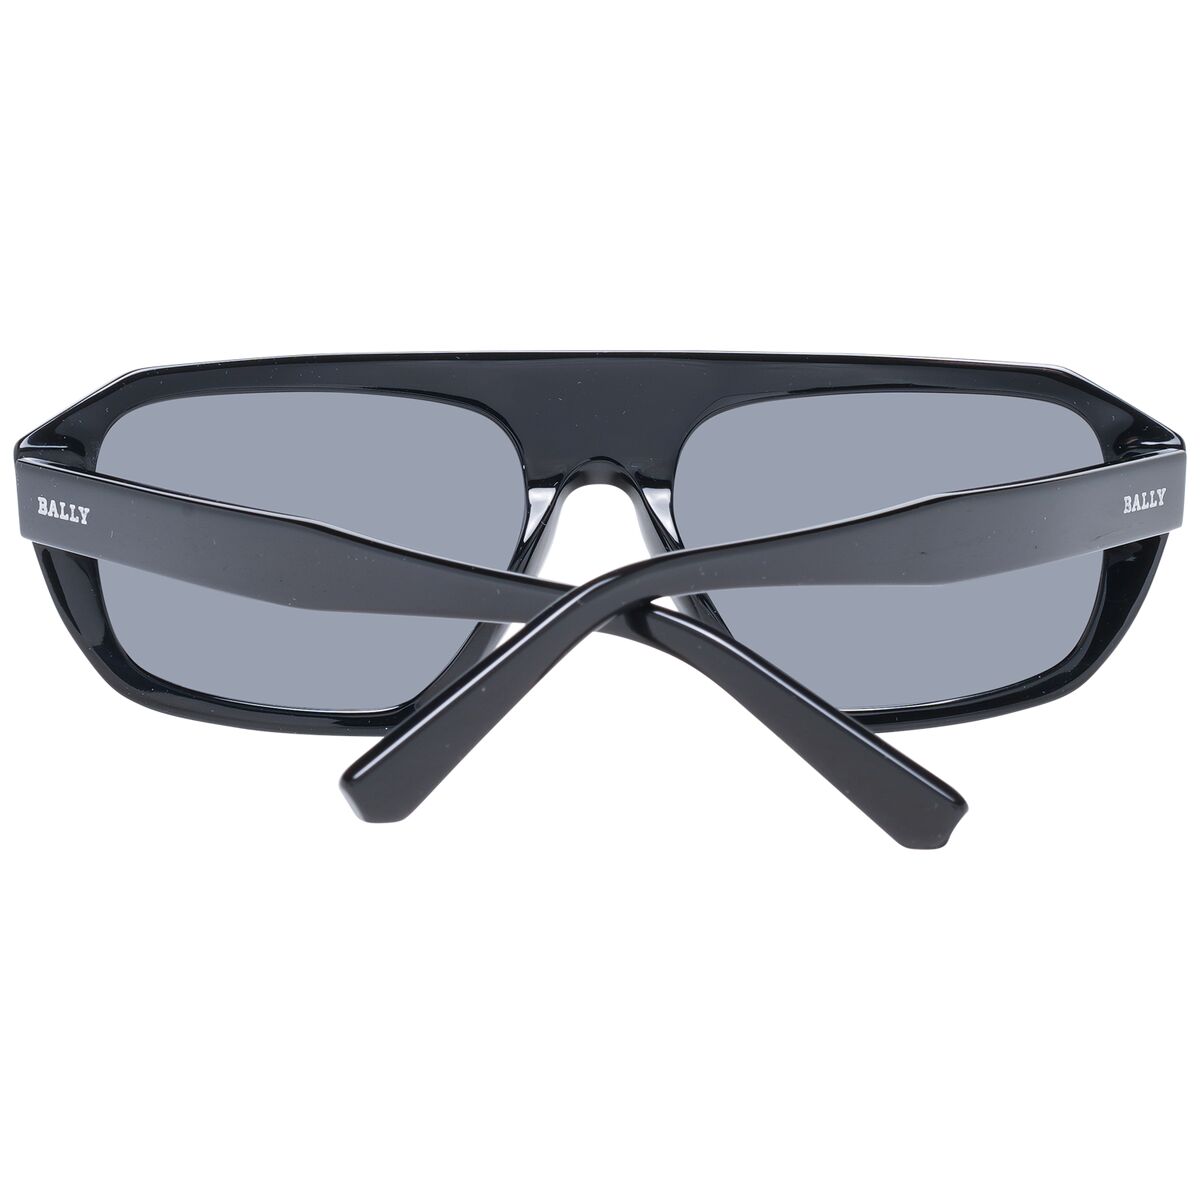 Kaufe Unisex-Sonnenbrille Bally BY0026 5801A bei AWK Flagship um € 97.00